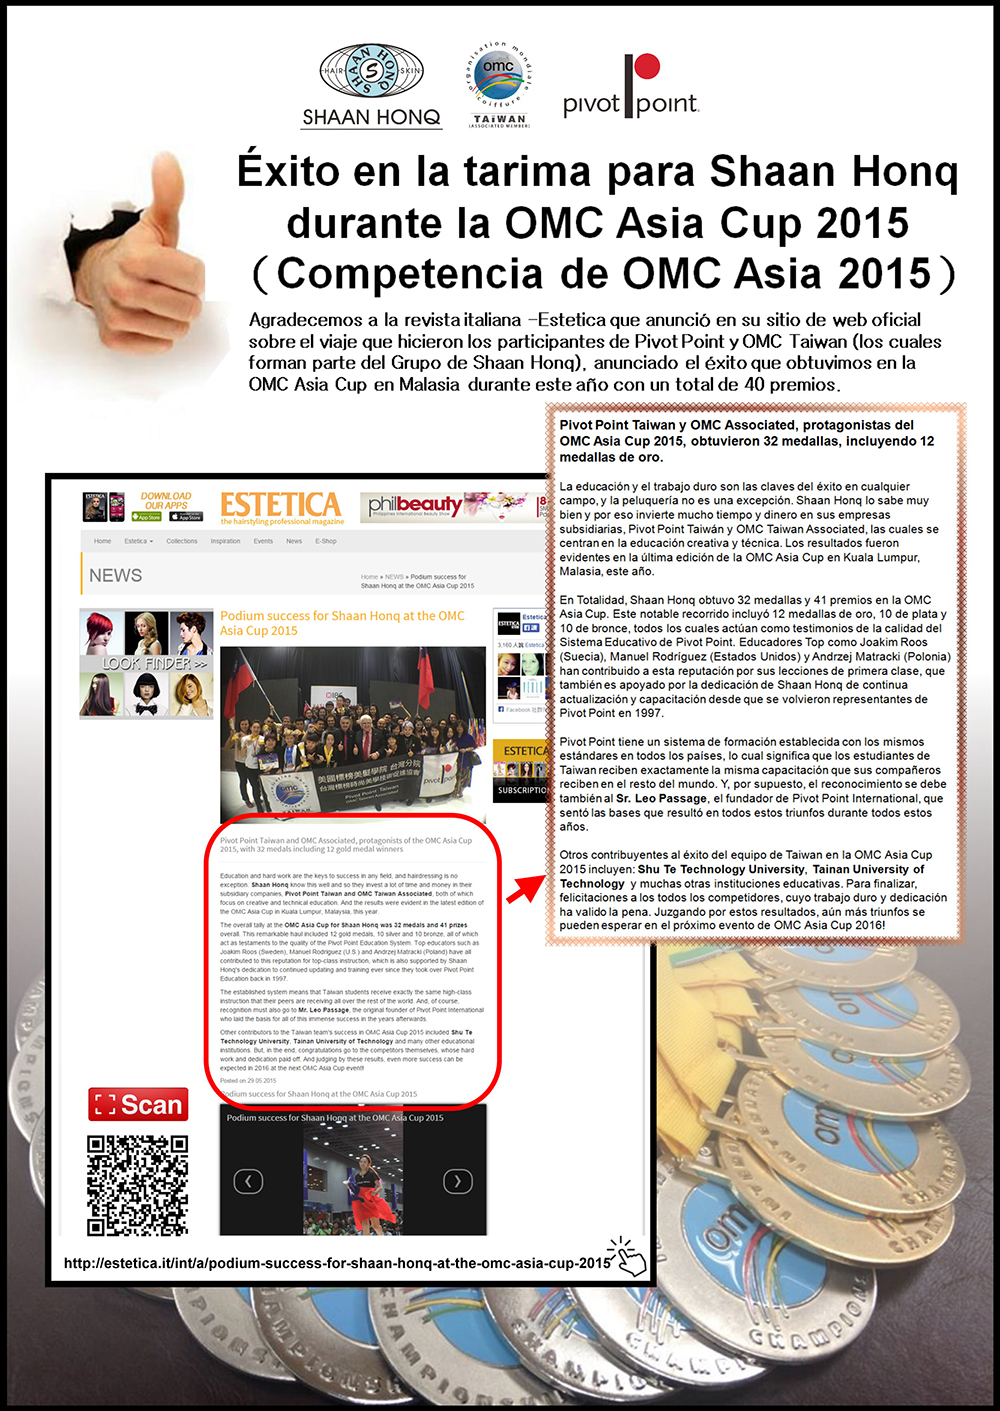  Competencia de OMC Asia 2015